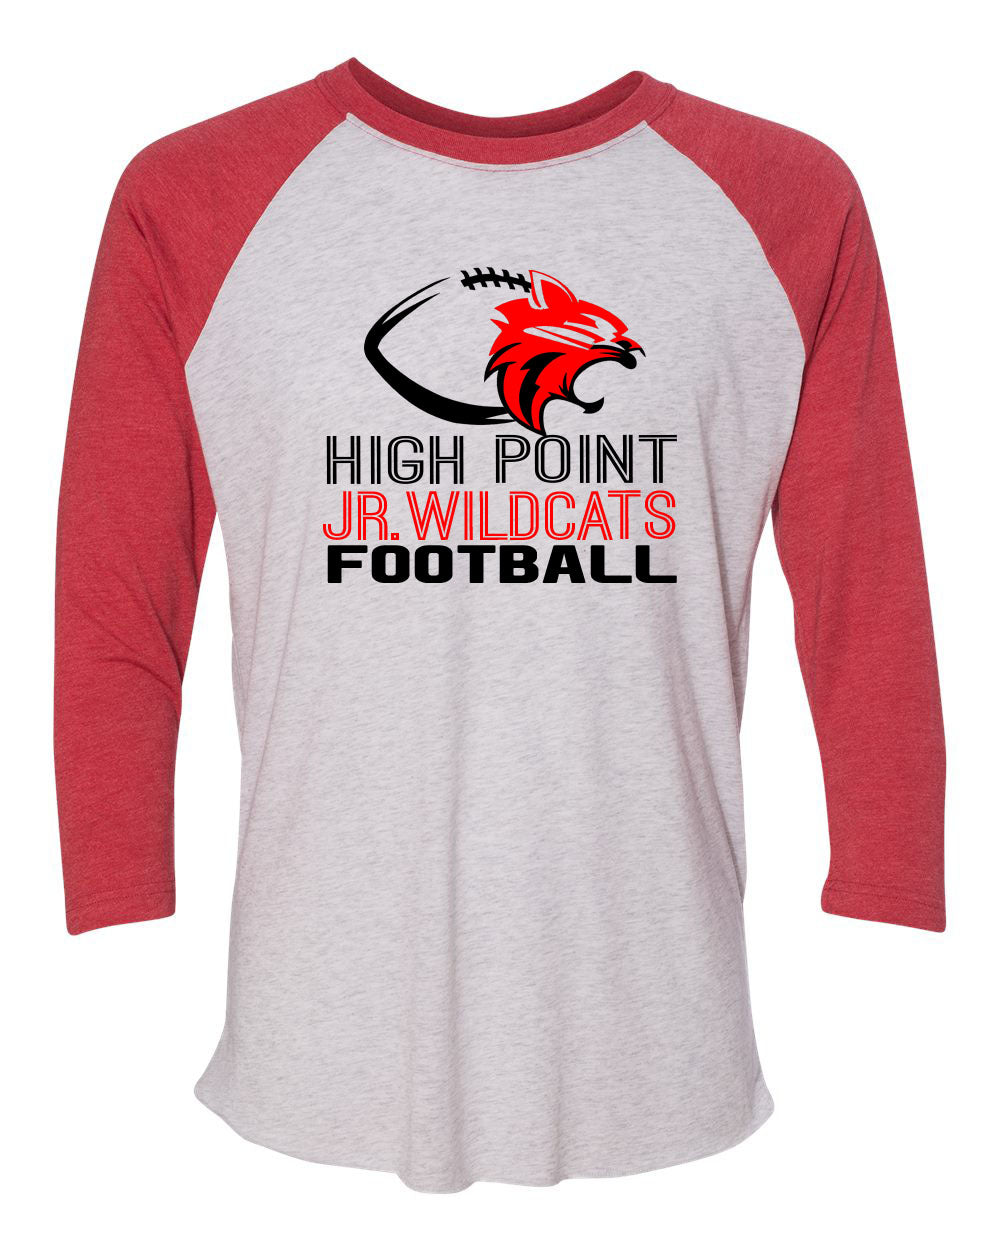 High Point Football design 1 raglan shirt